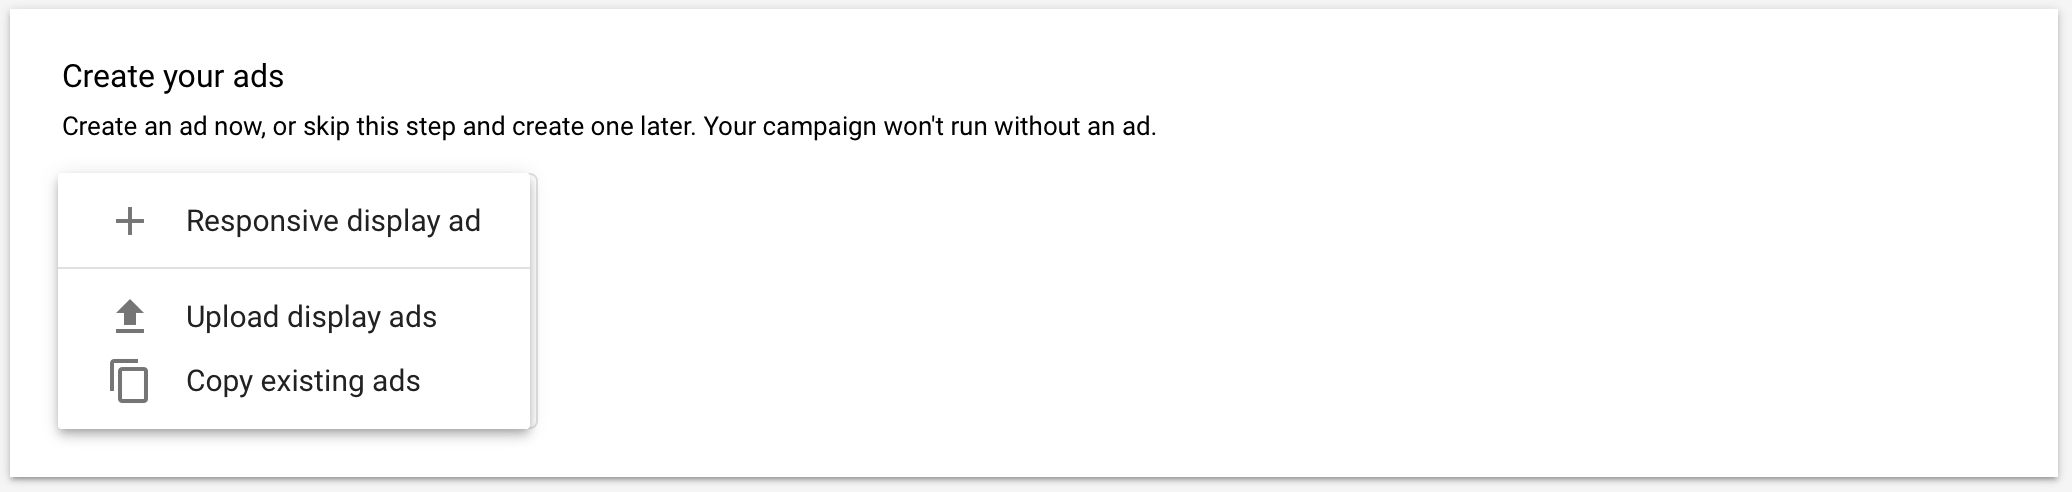 Create Display Ads in Google Adwords